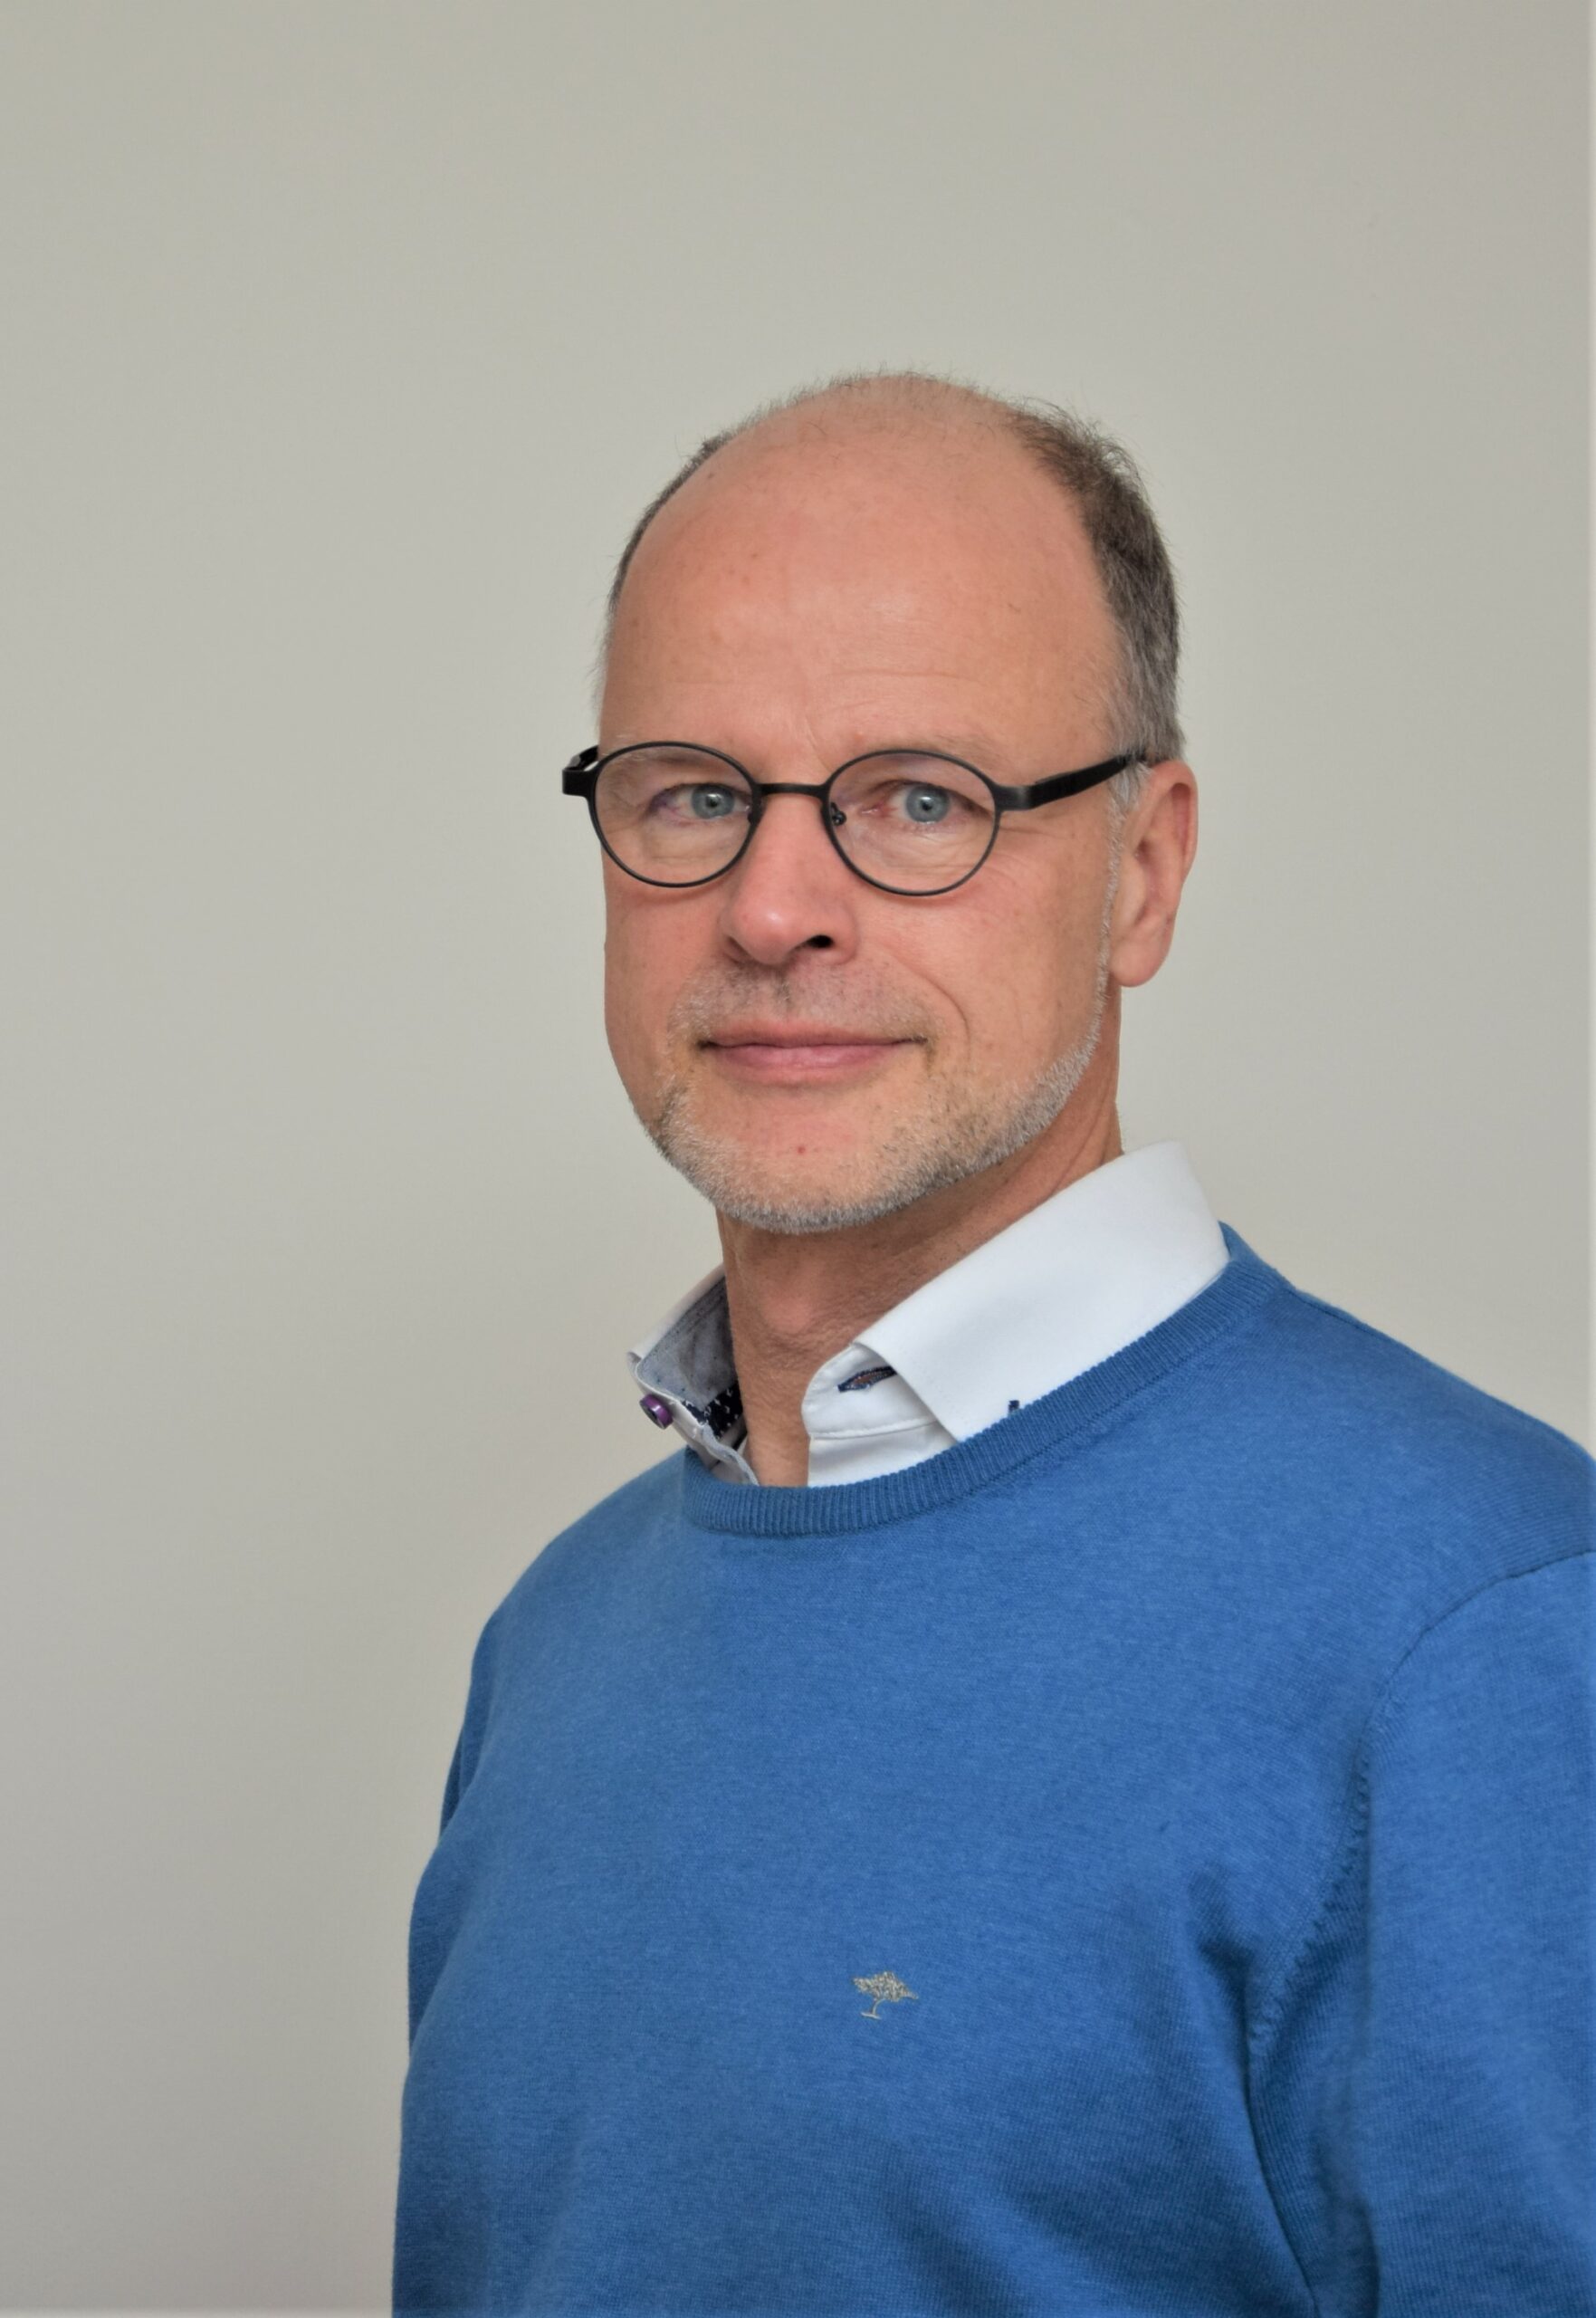 Jörg Petrick